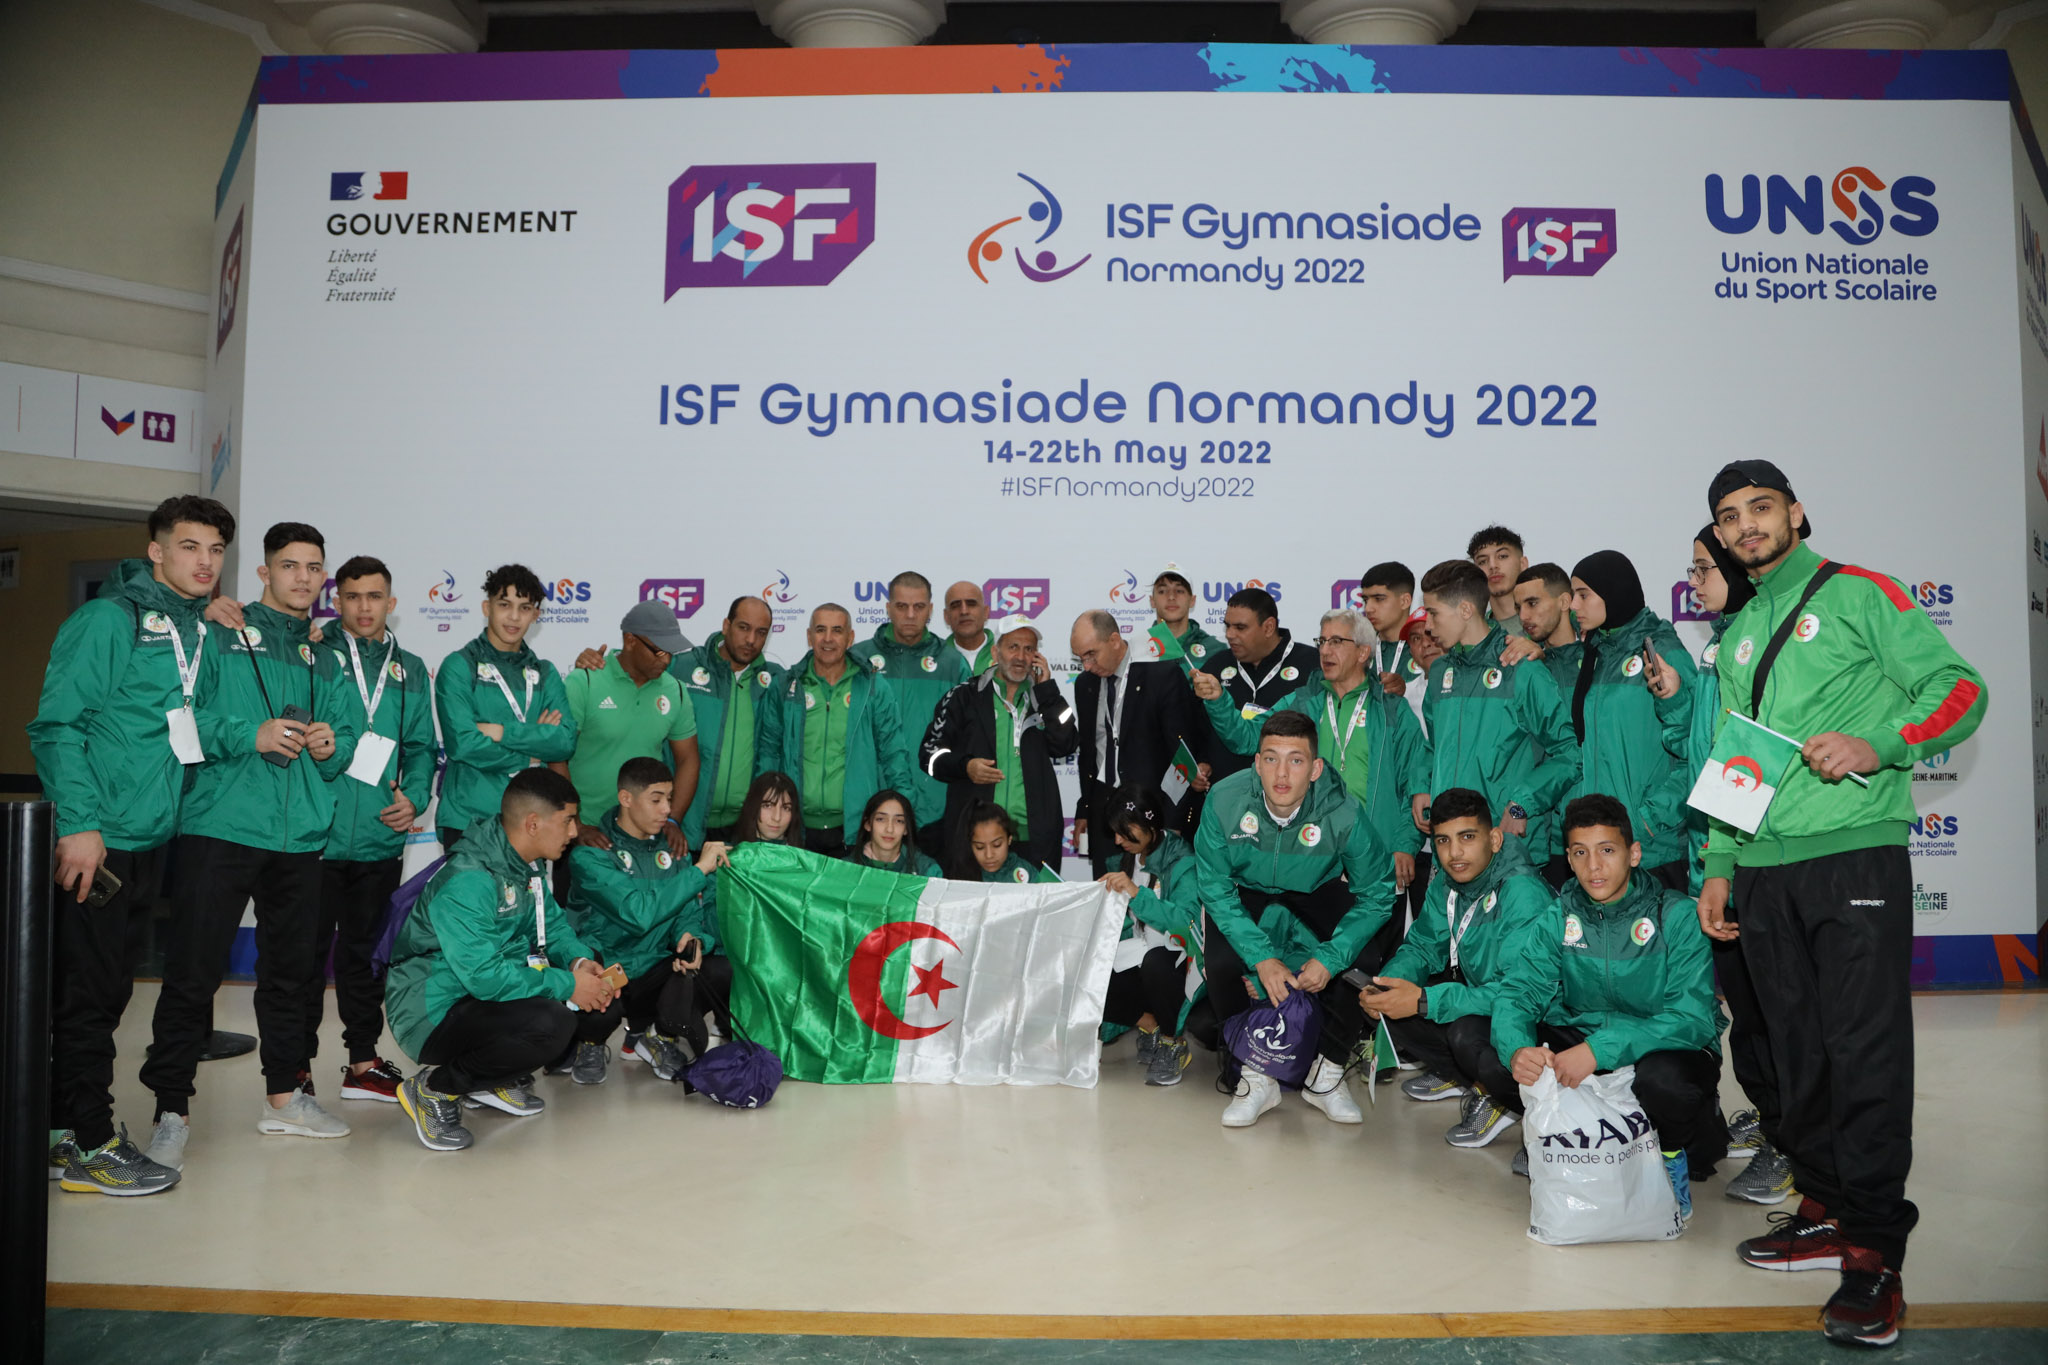 ISF Gymnasiade 2022 - Events